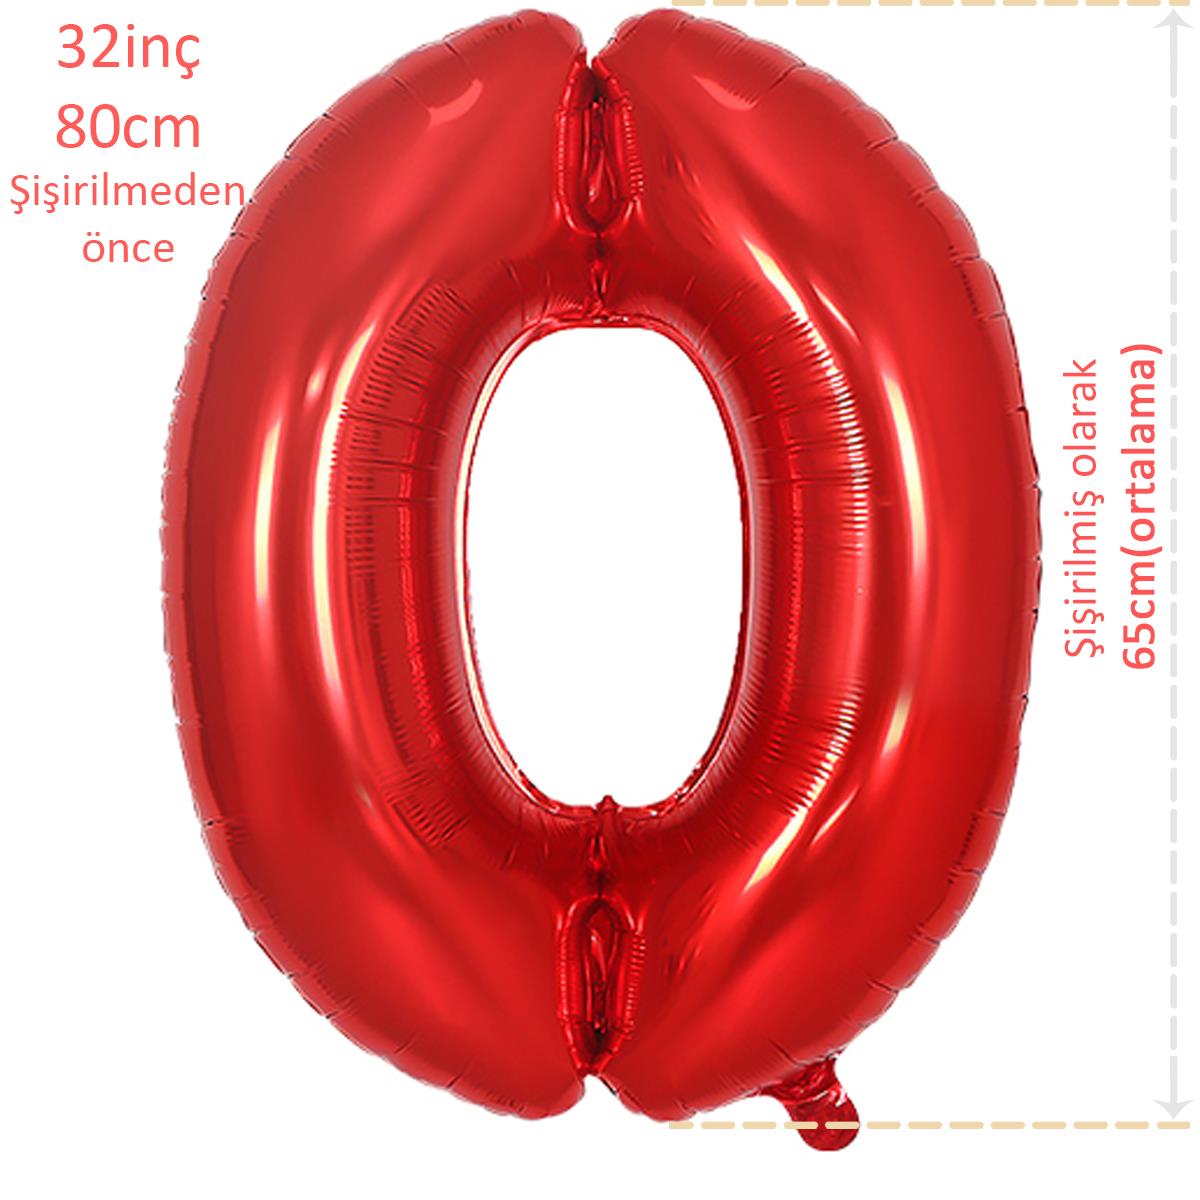 Rakam Folyo Balon Kırmızı 0 Rakamı 32inç 80cm